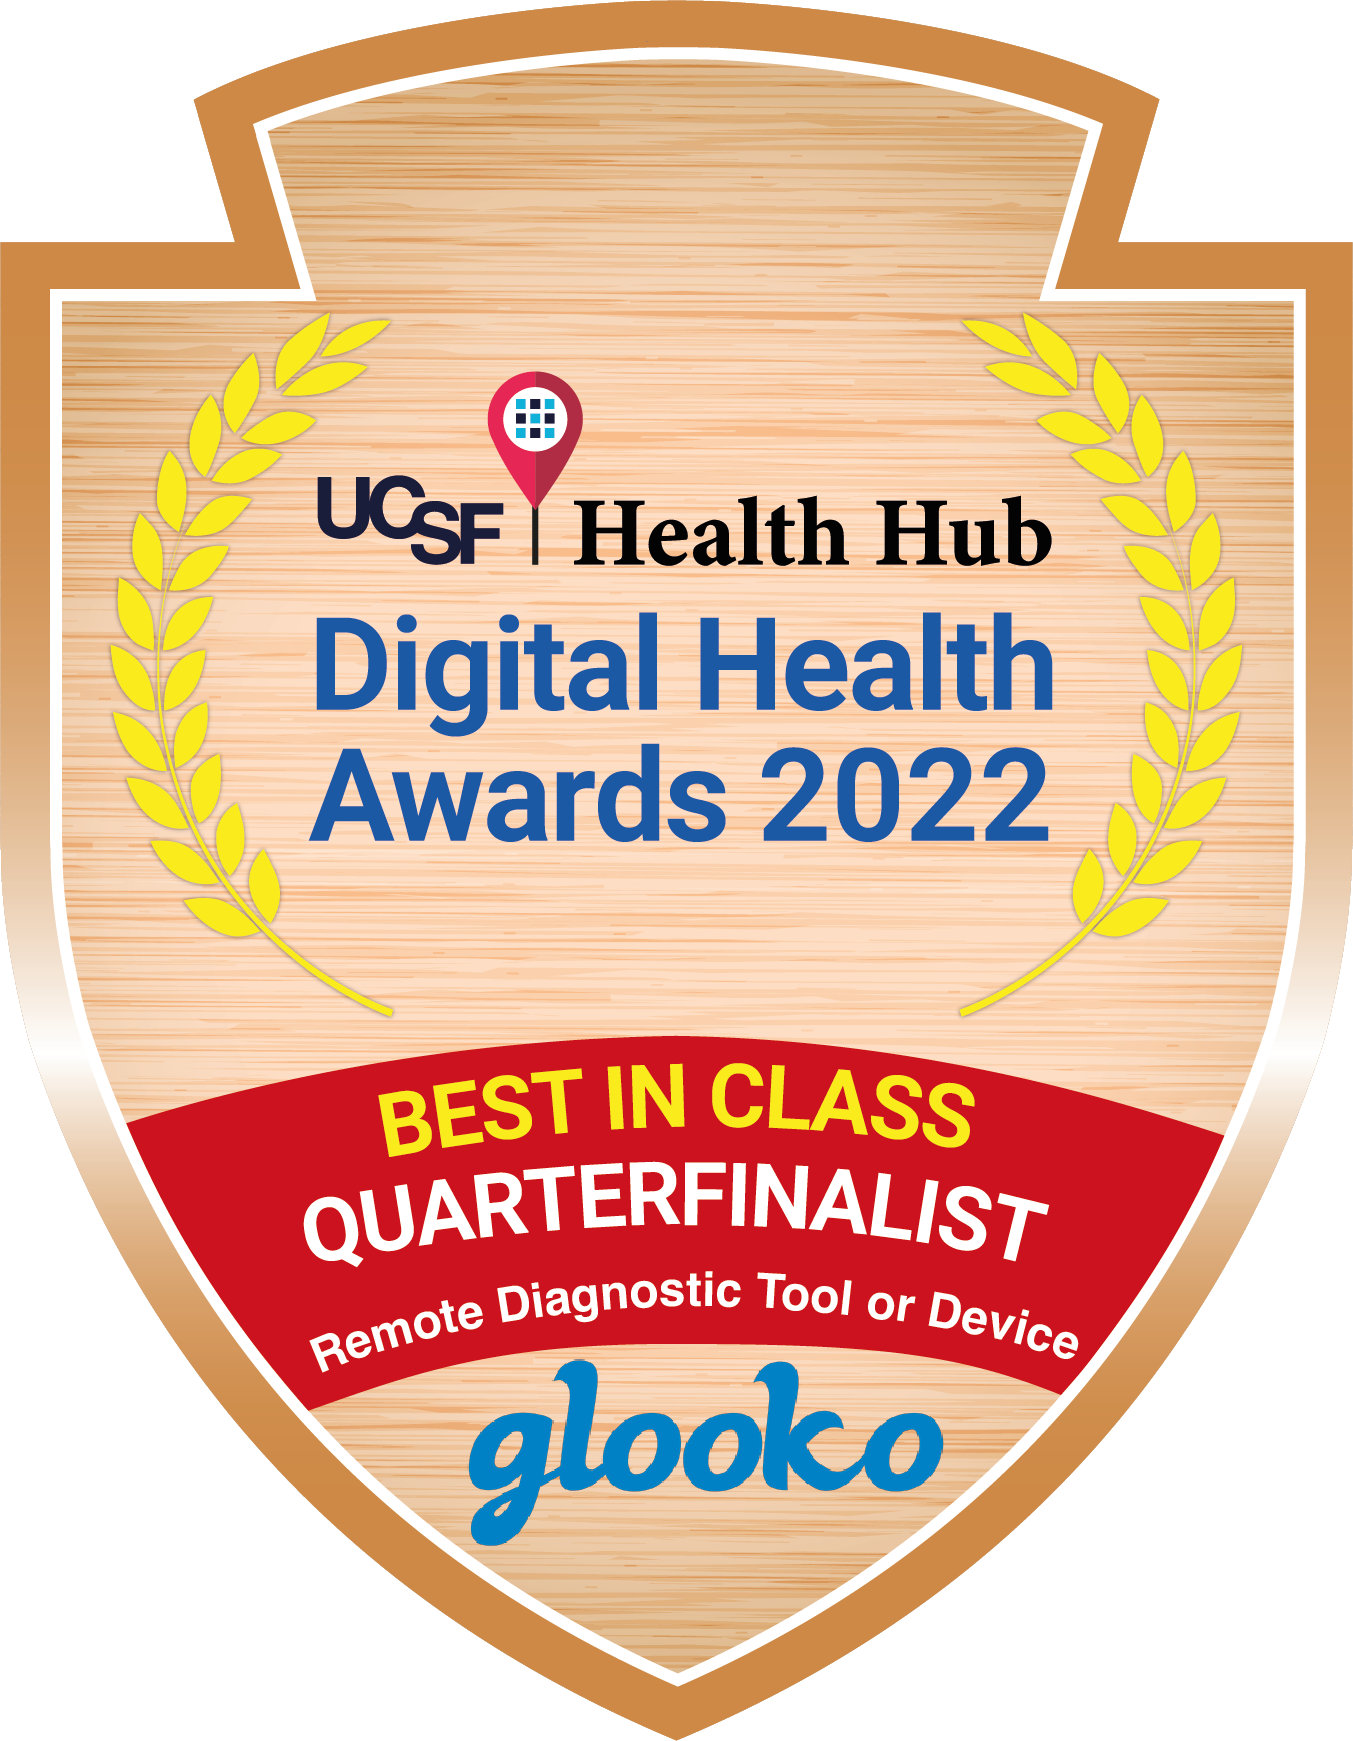 UCSF Digital Health Awards 2022 Logo with Glooko